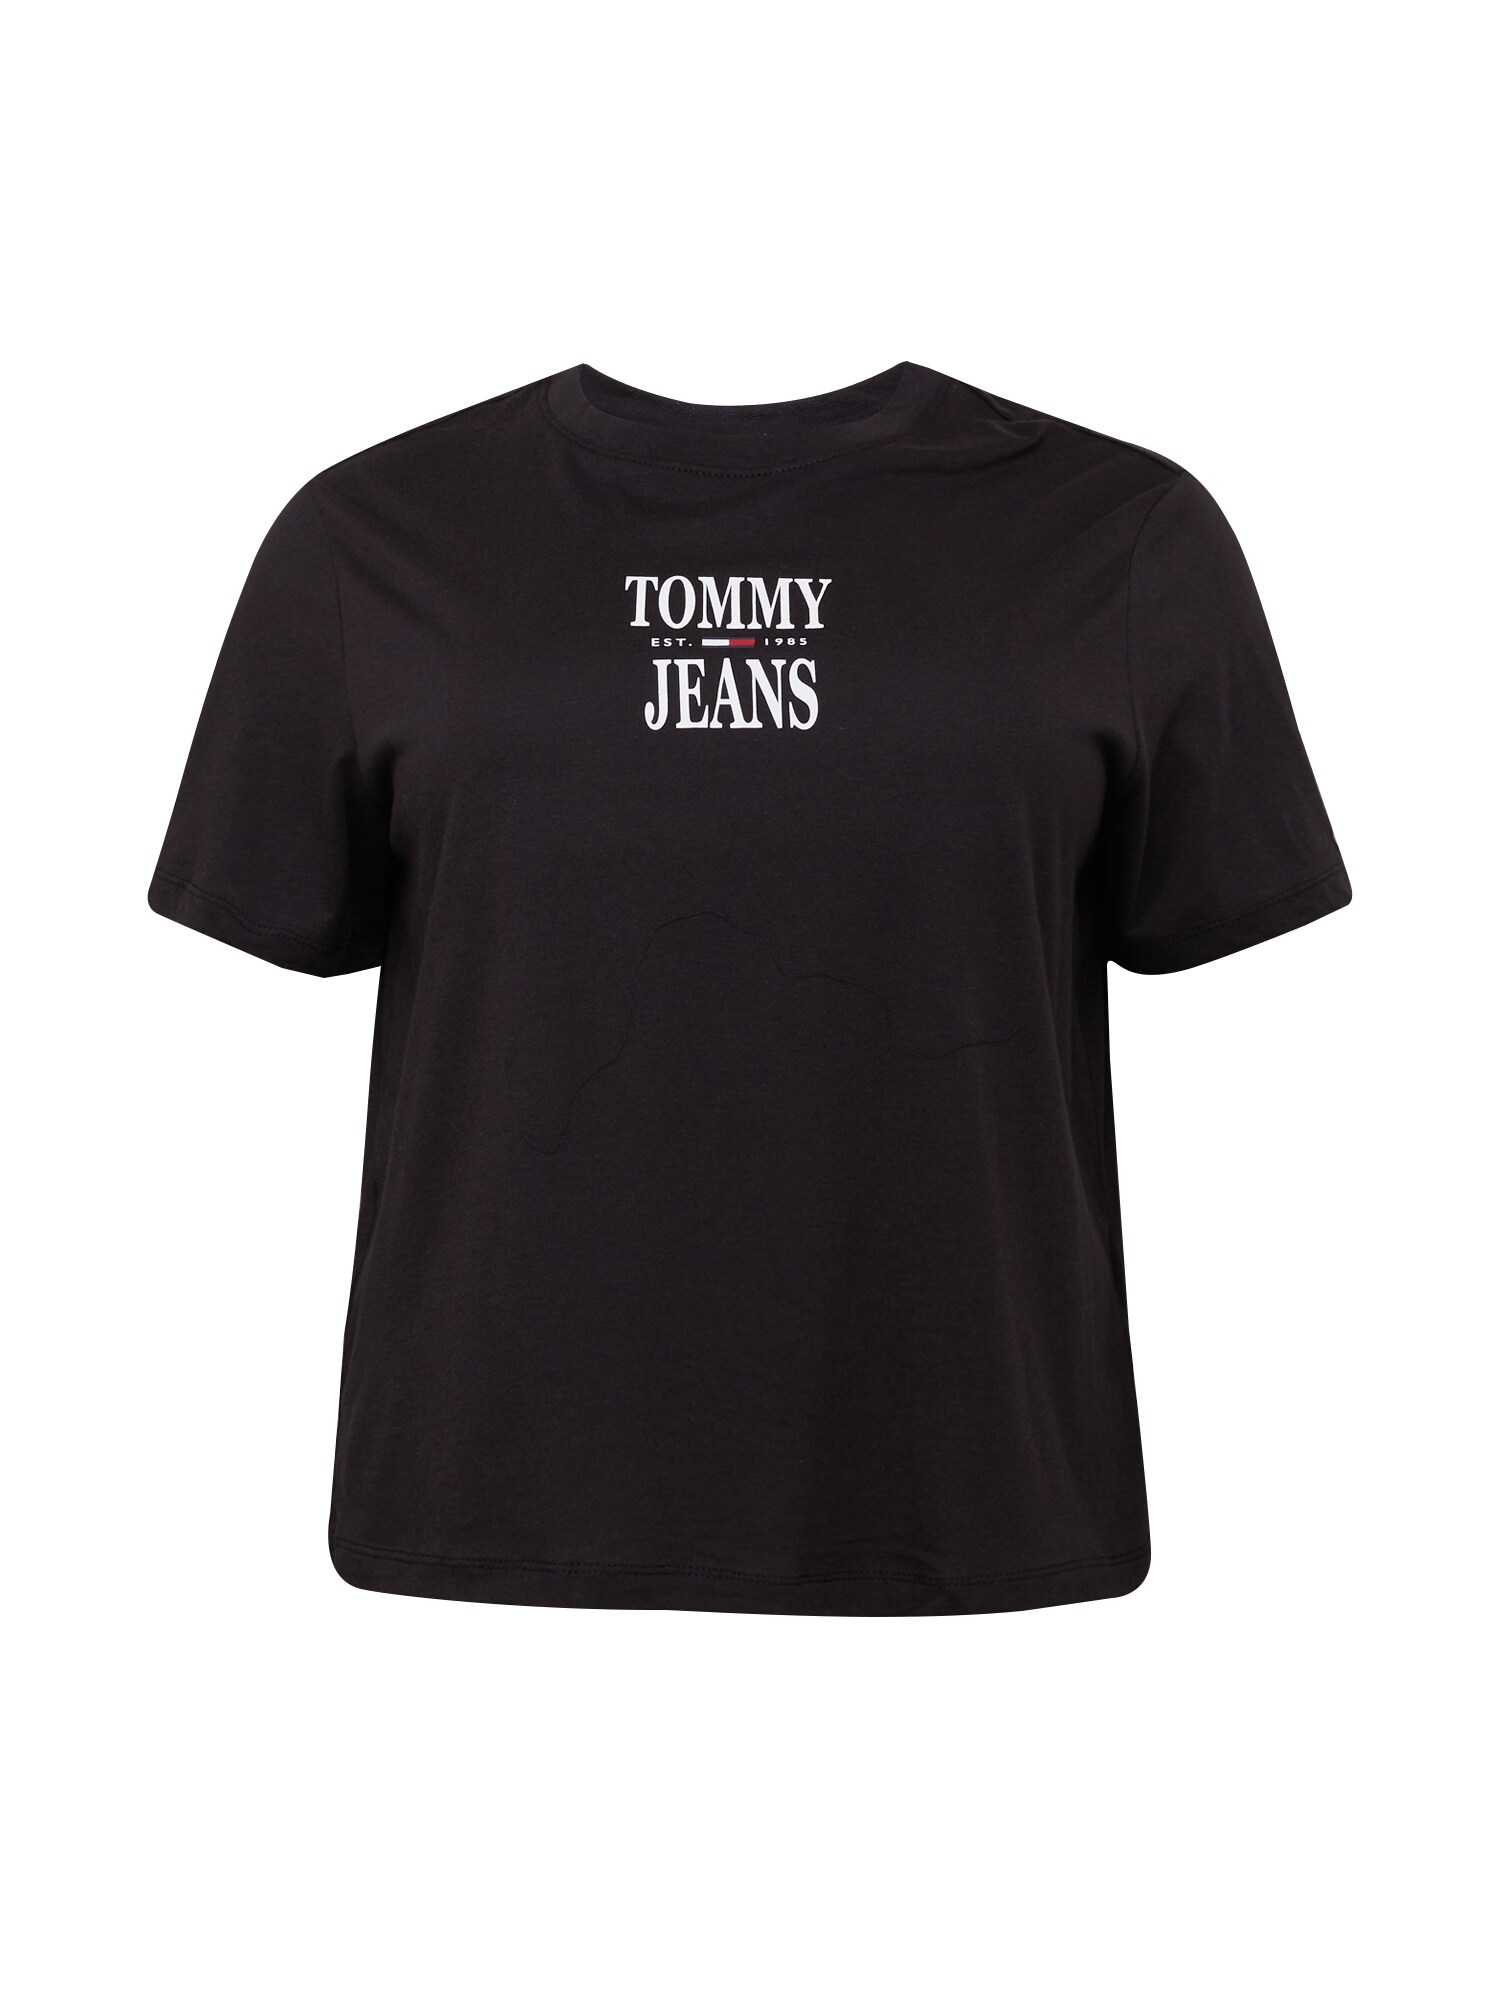 Tommy Jeans Curve Marškinėliai juoda / balta / raudona / tamsiai mėlyna